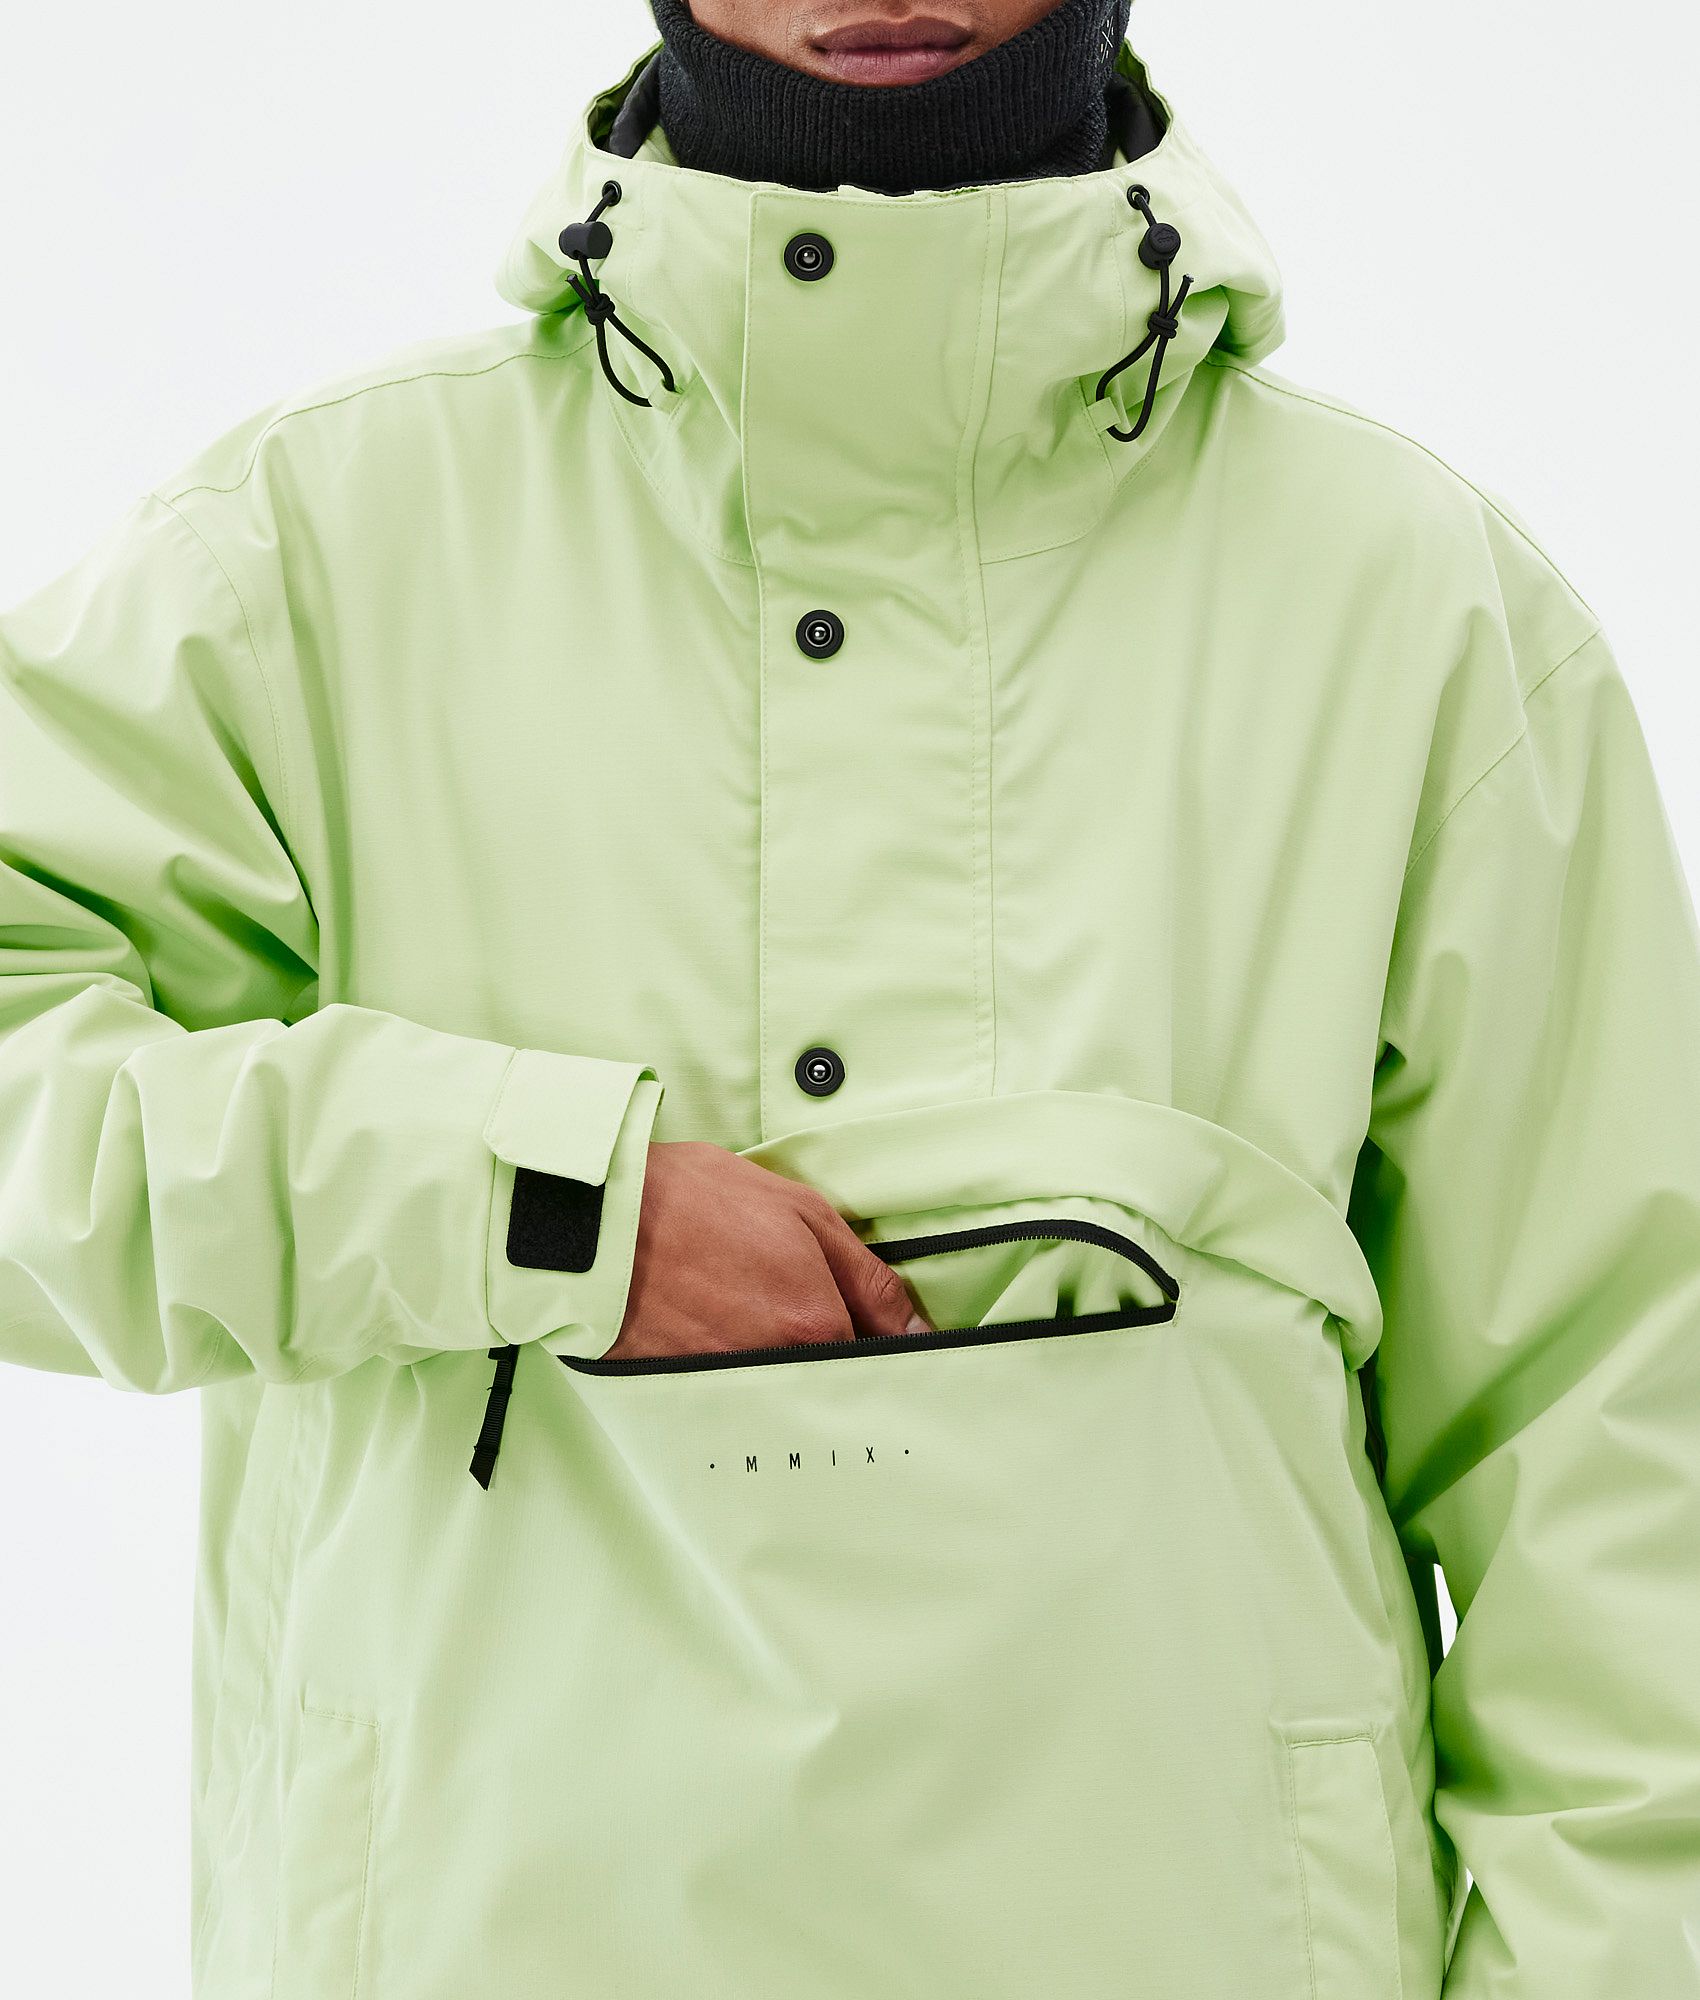 TREK mens sz S neon yellow lightweight vented circuit jacket EUC | eBay